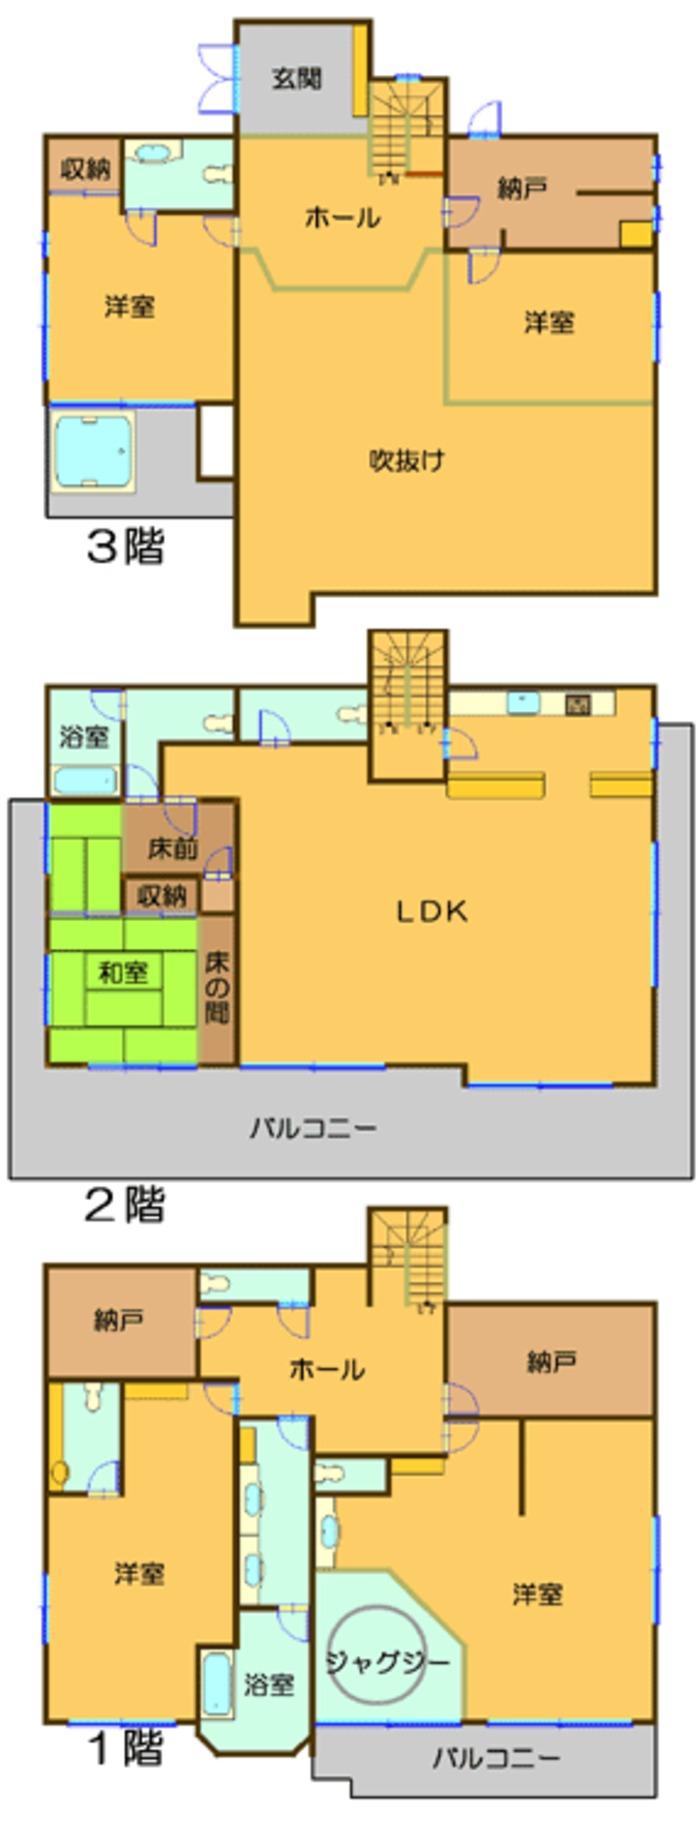 Floor plan. 180 million yen, 6LDK + S (storeroom), Land area 3,758 sq m , Building area 391.45 sq m